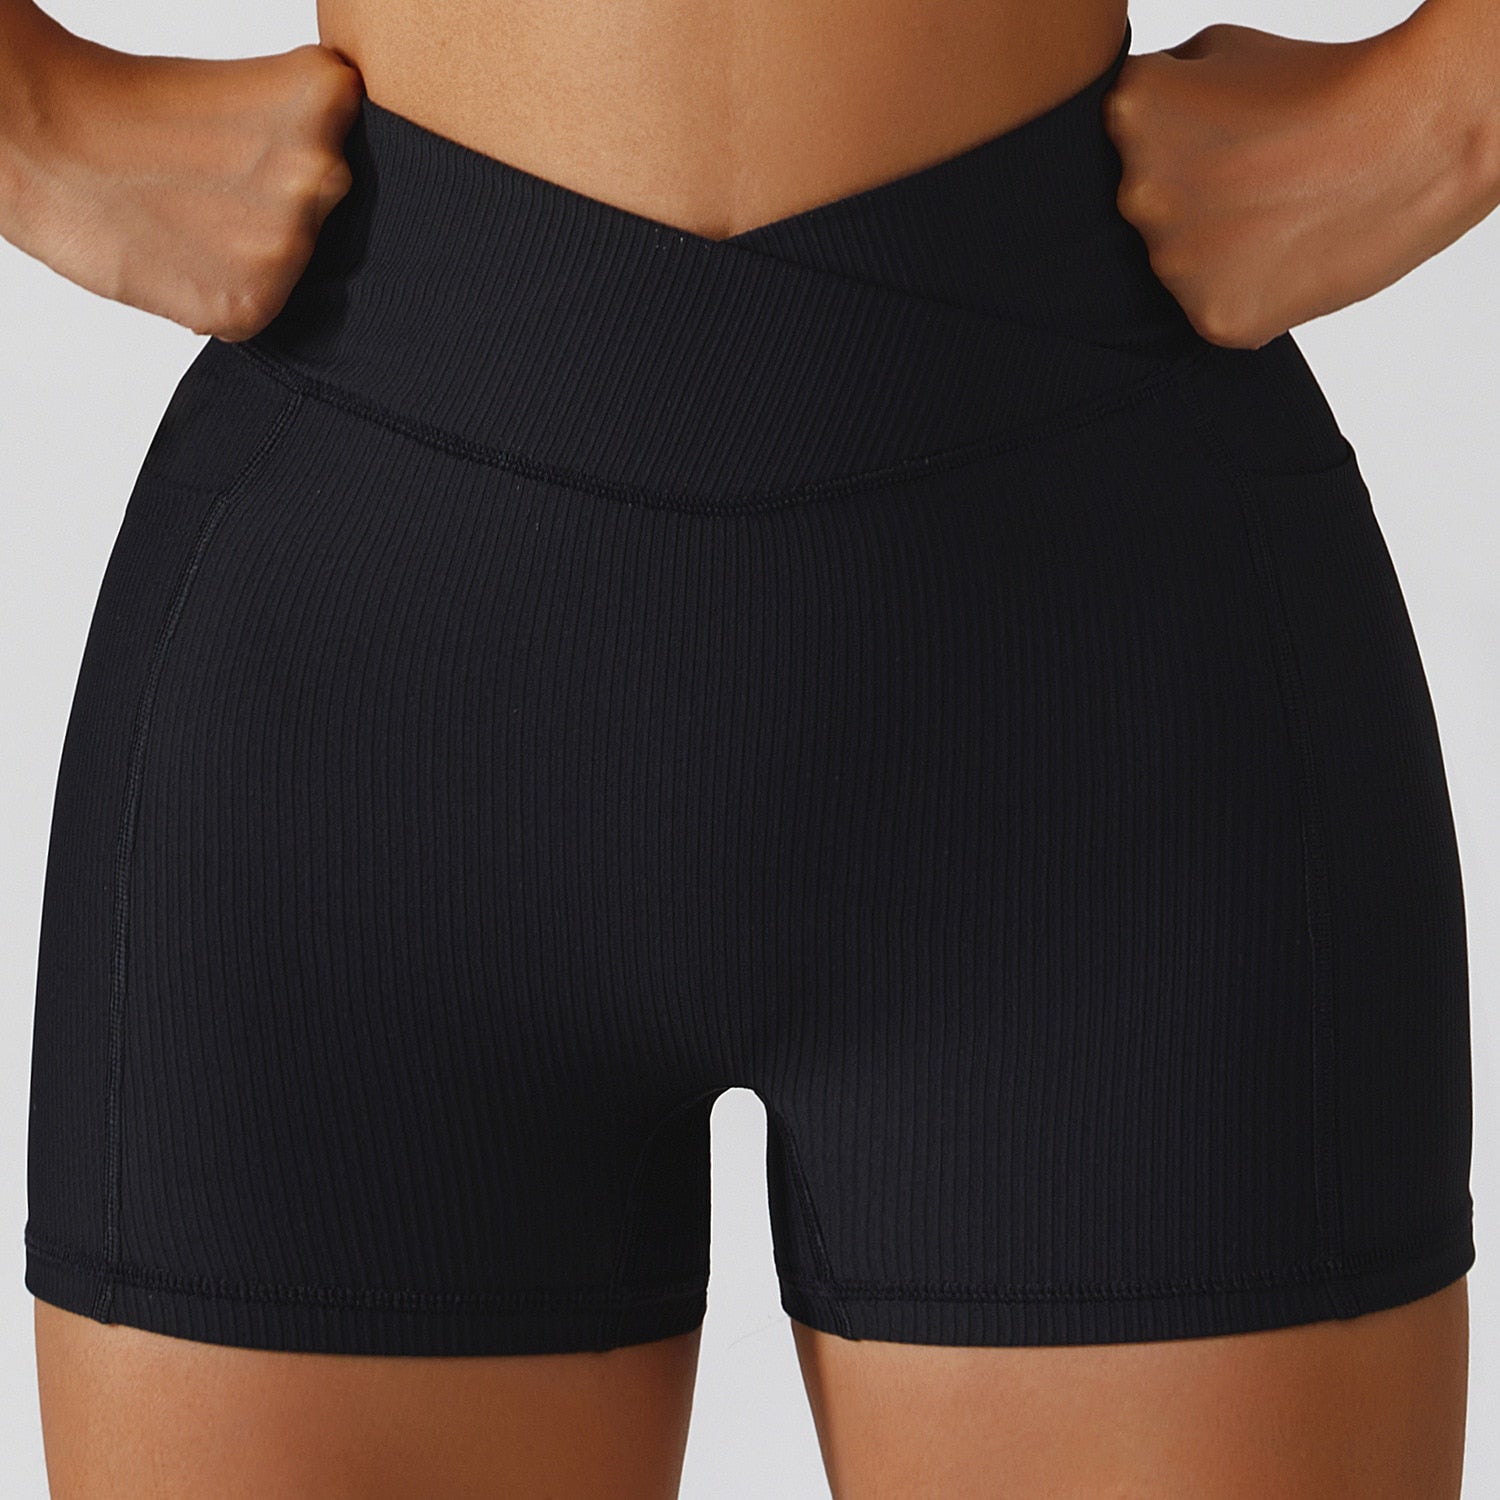 Women Gym Crop Top Bra Shorts shorts 1pcs